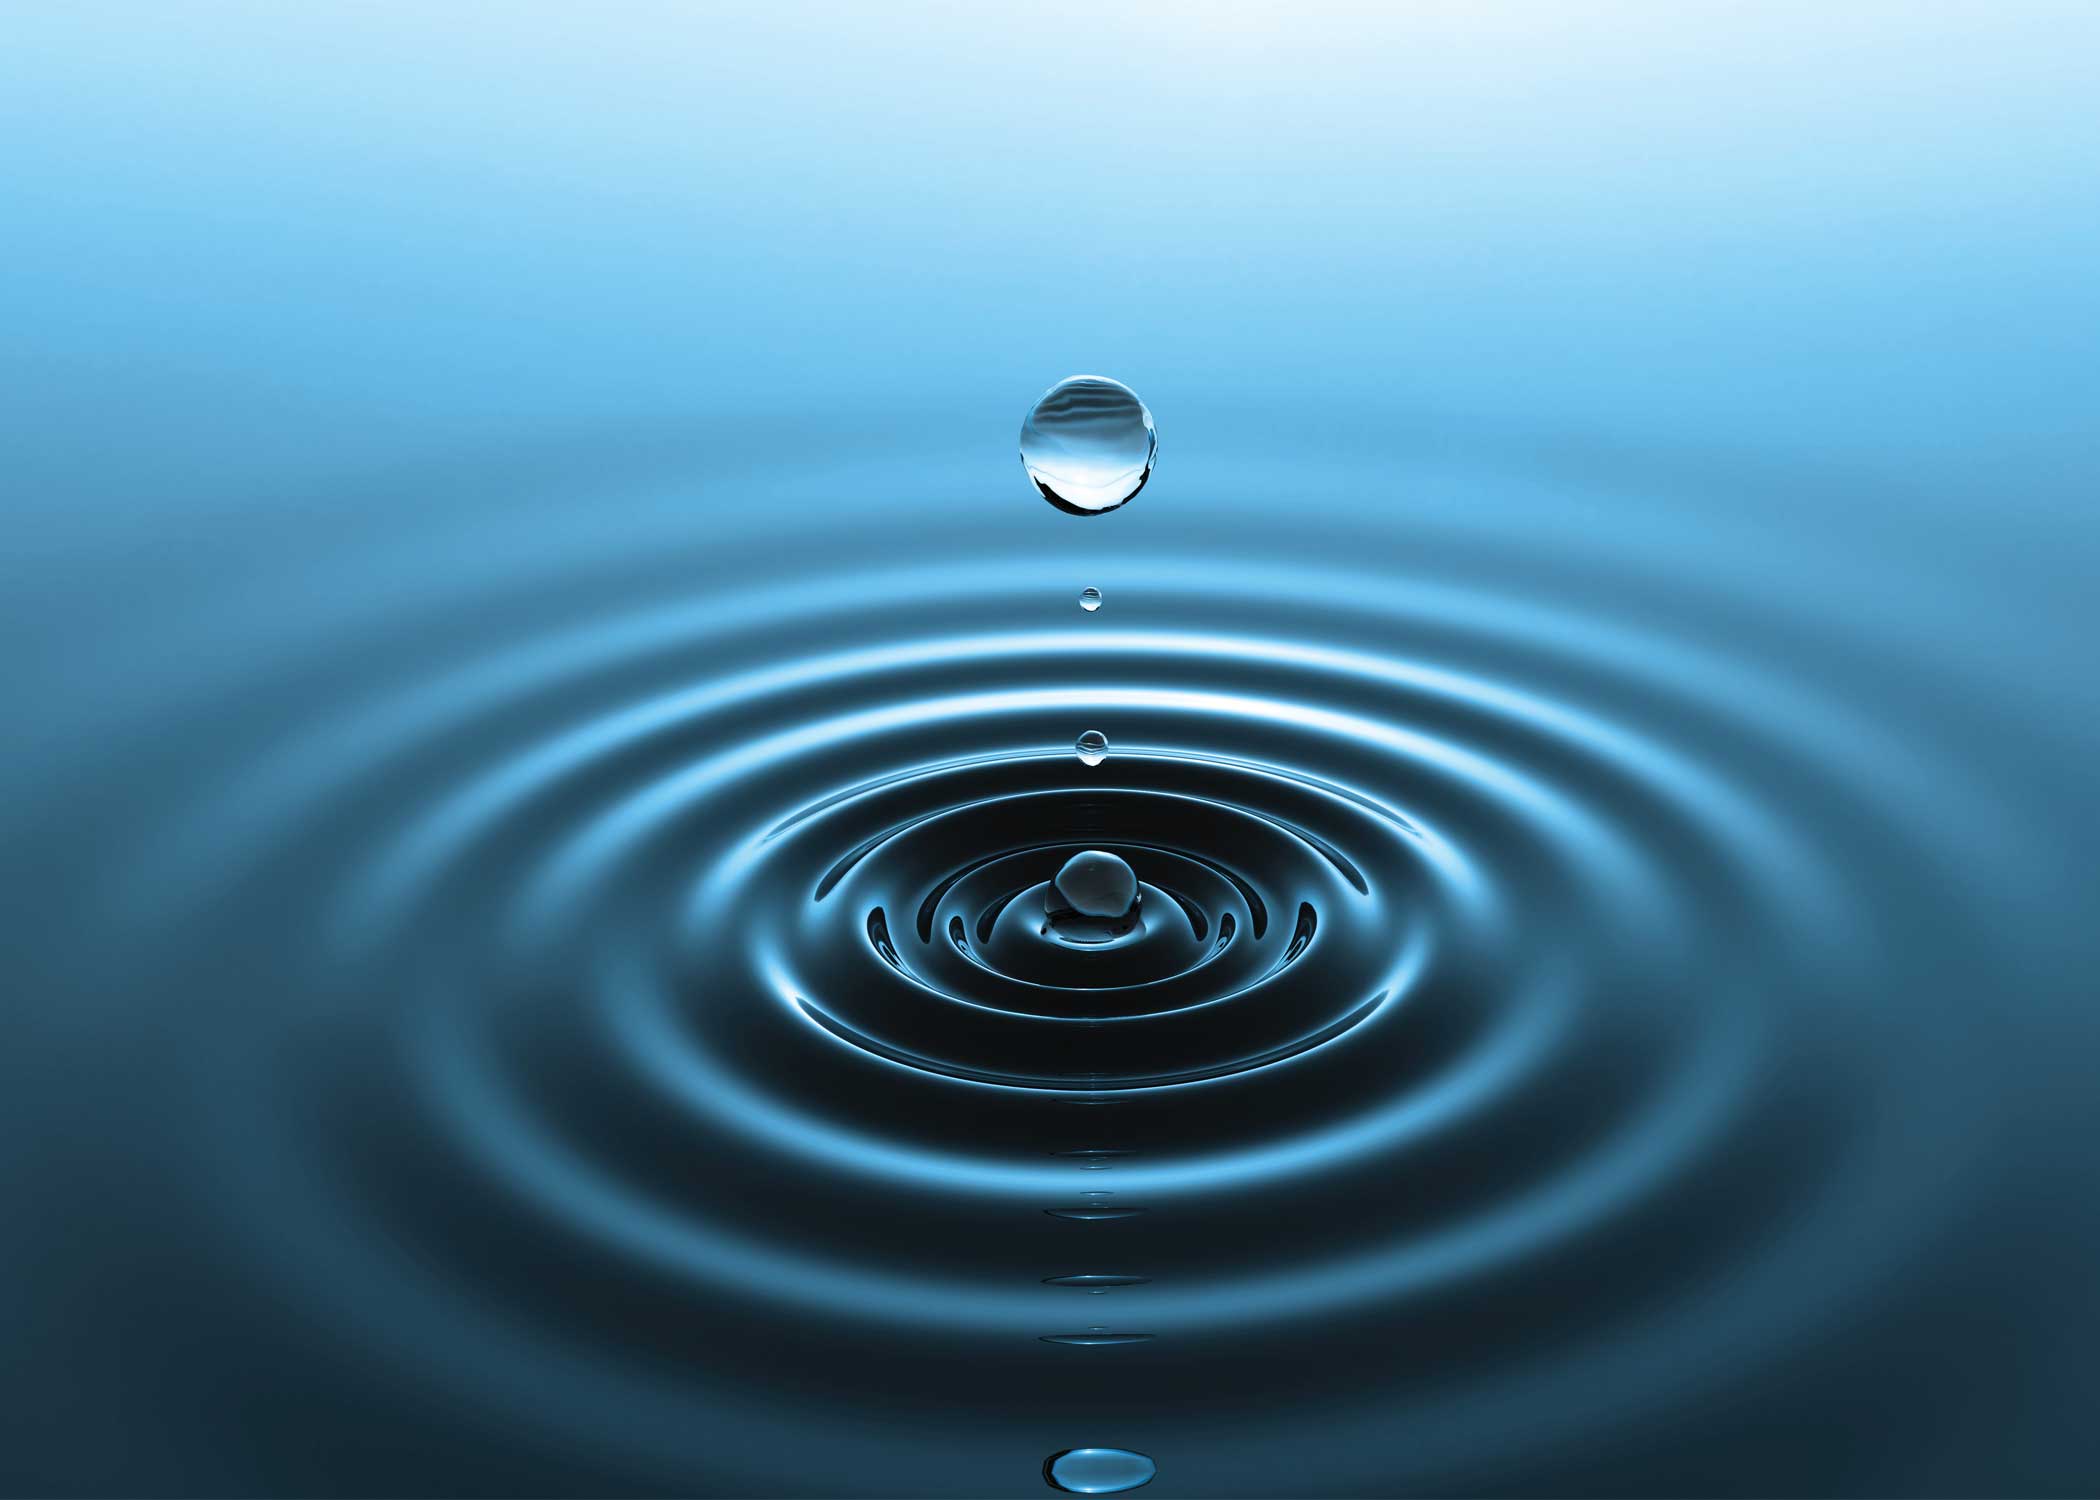 water drop creates ripples